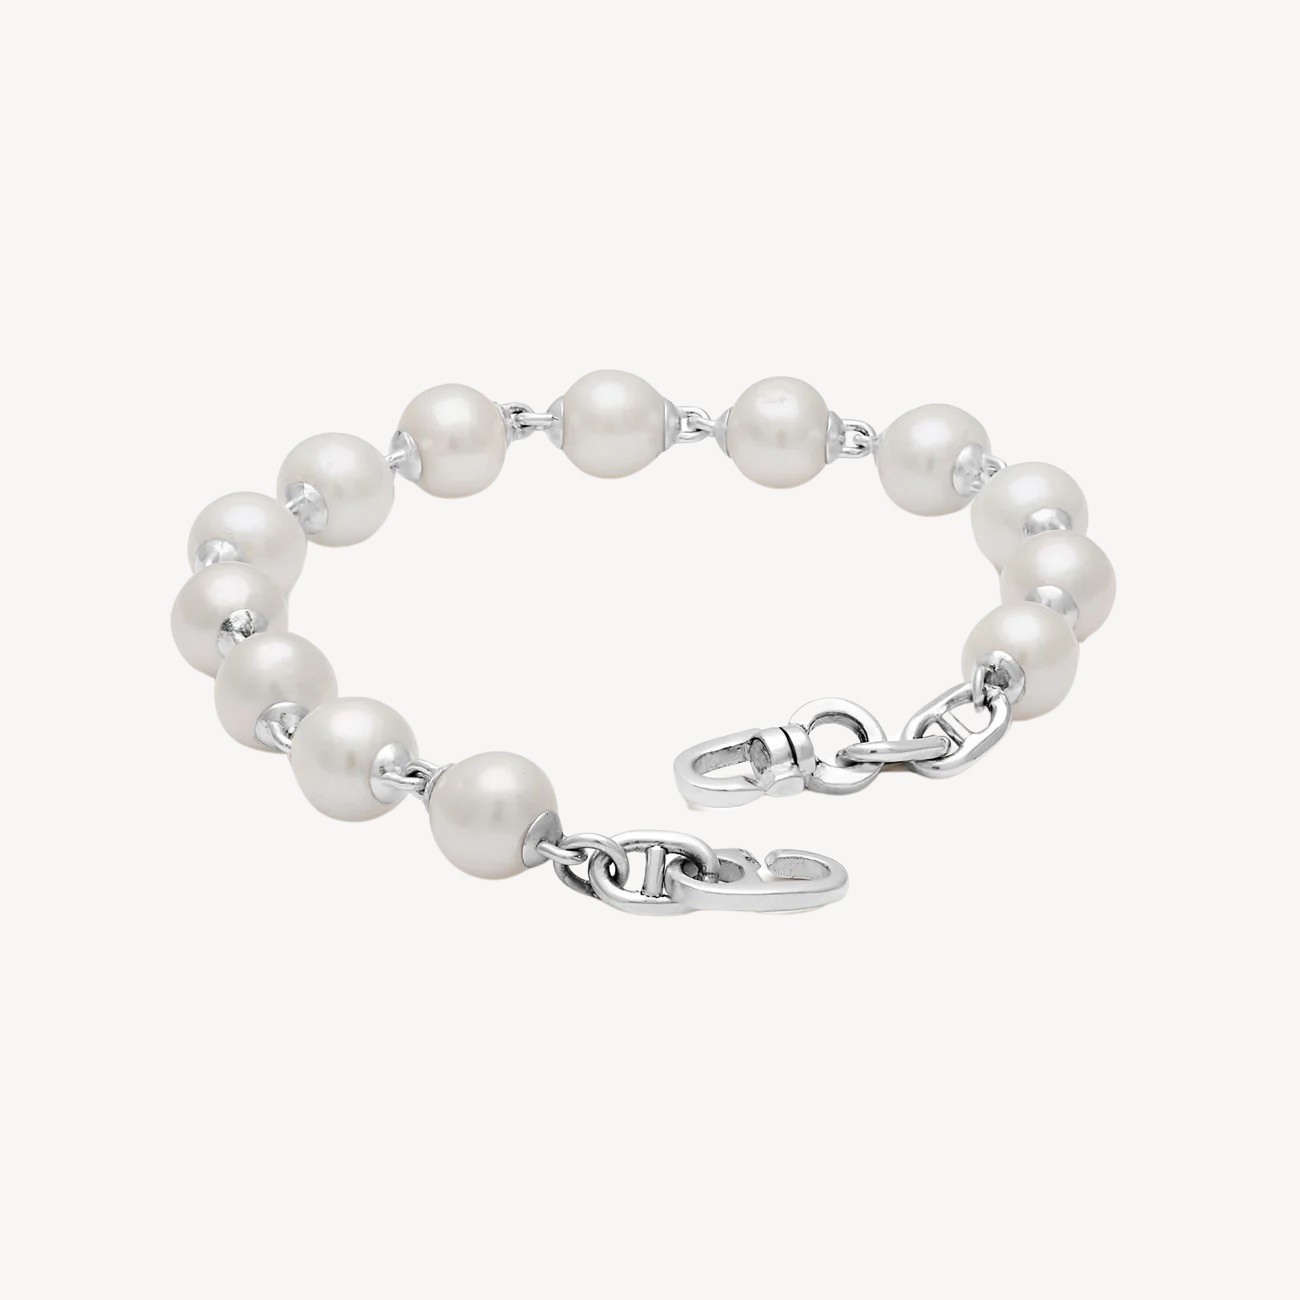 Consi Bracelet White Pearls Large